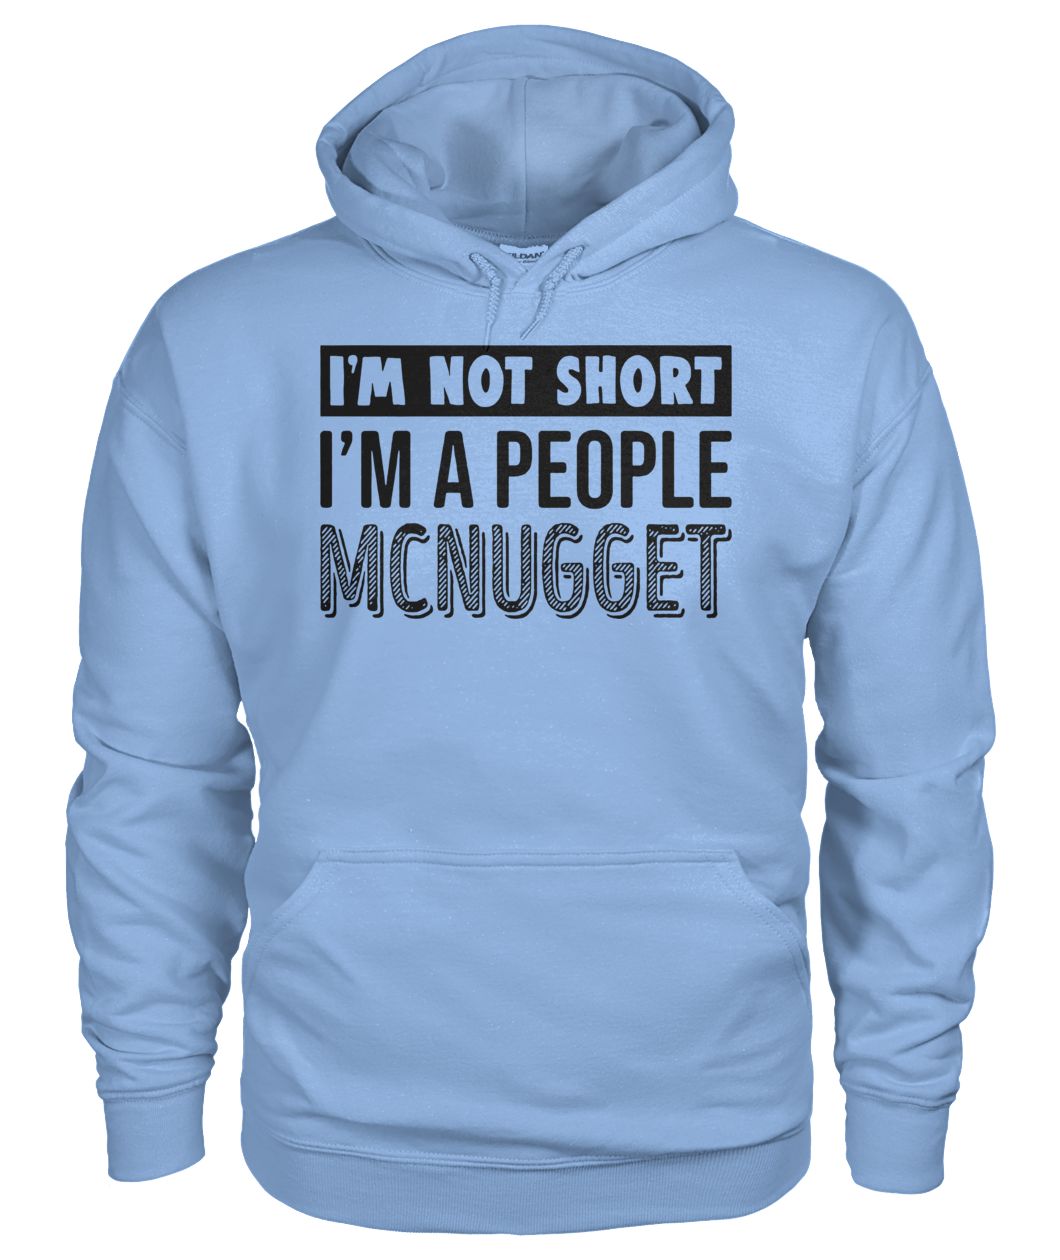 I'm not short I'm a people mcnugget gildan hoodie